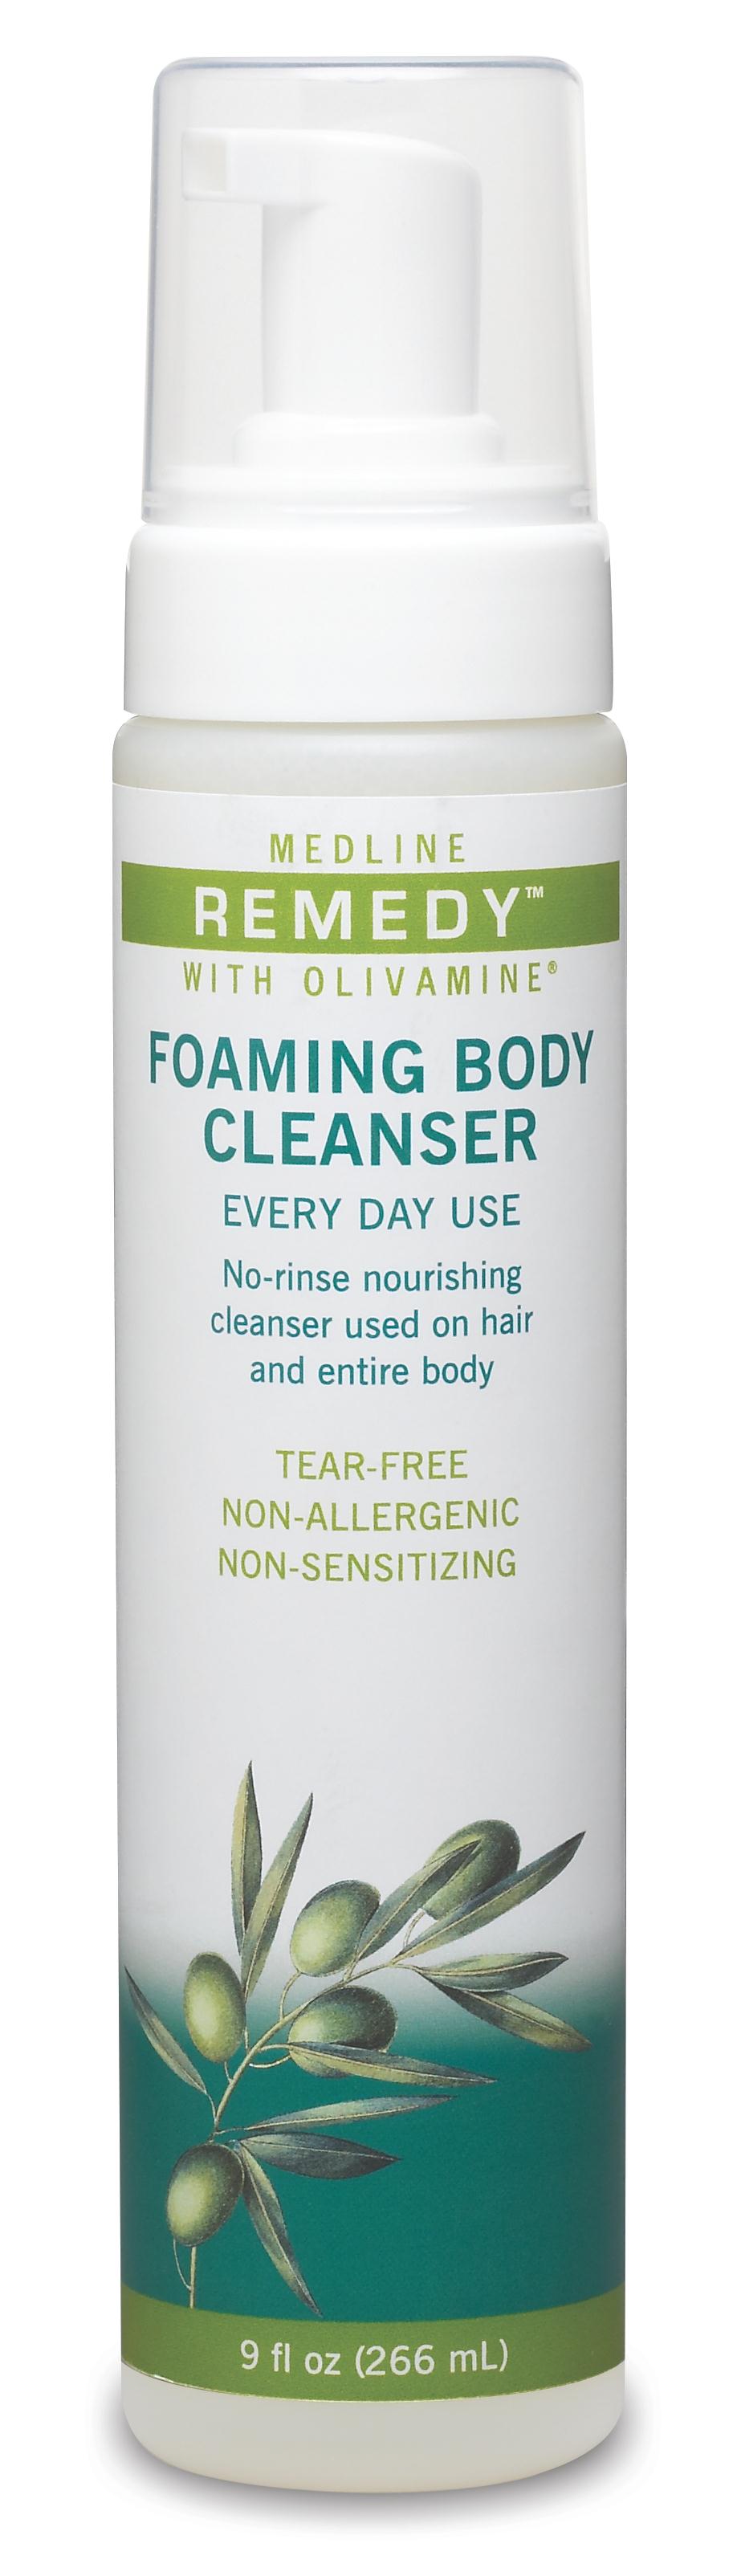 Remedy Foaming Body Cleanser, 8 oz.